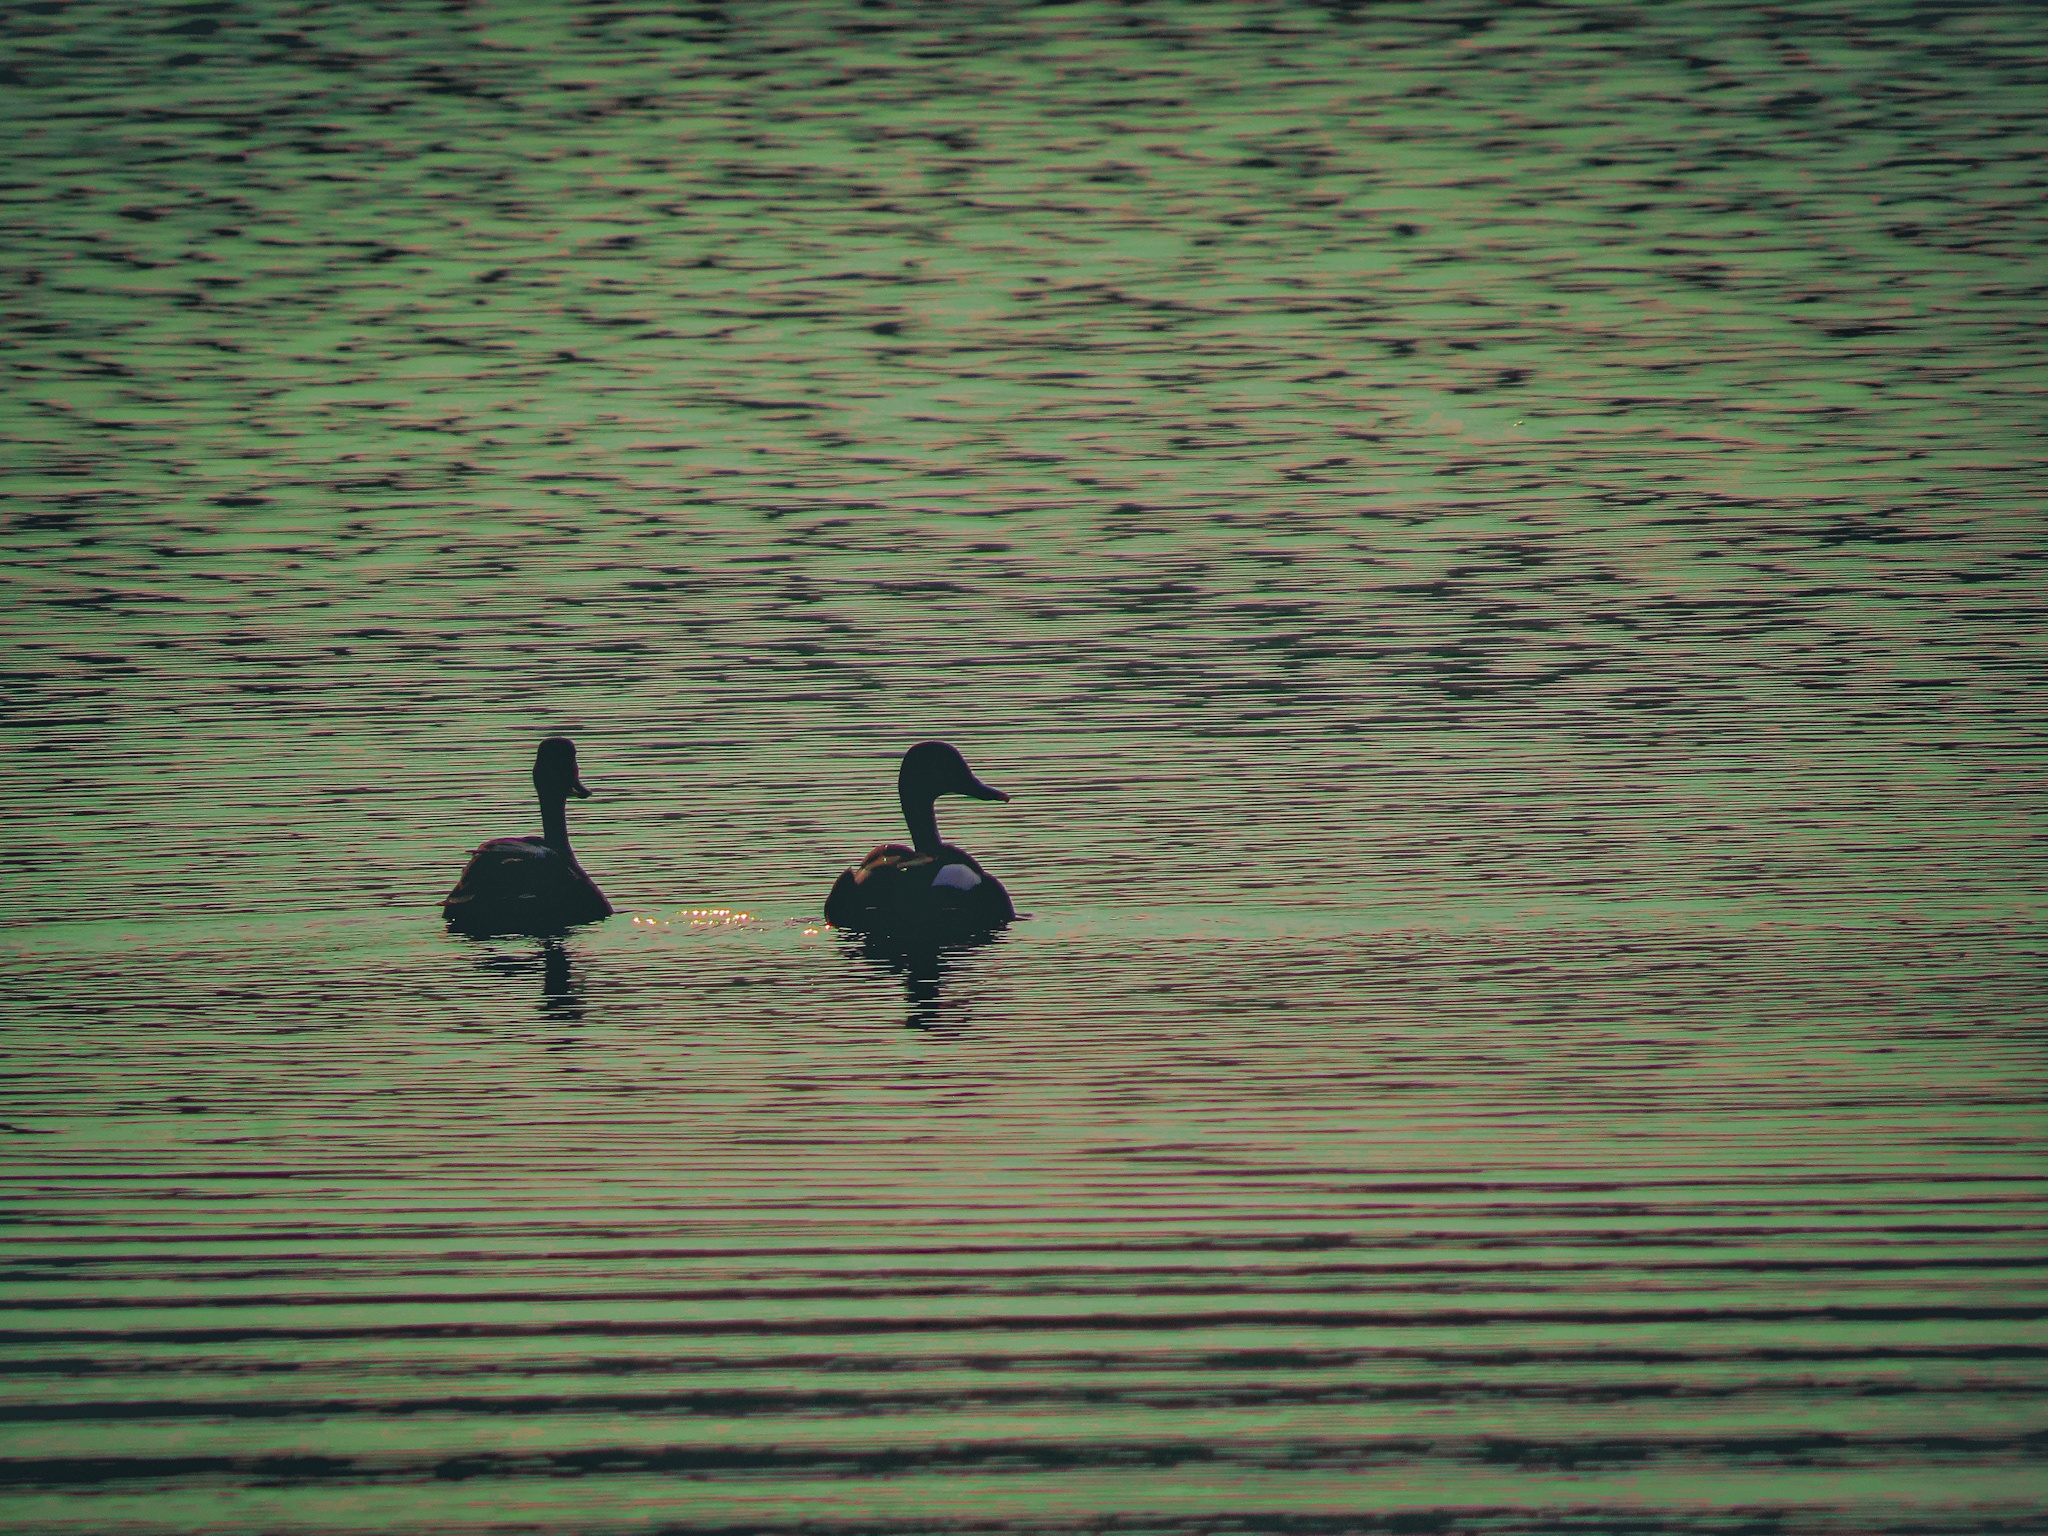 Ducks in a lake water